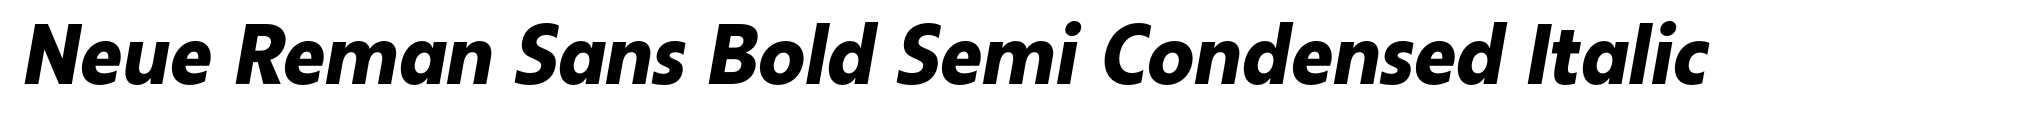 Neue Reman Sans Bold Semi Condensed Italic image